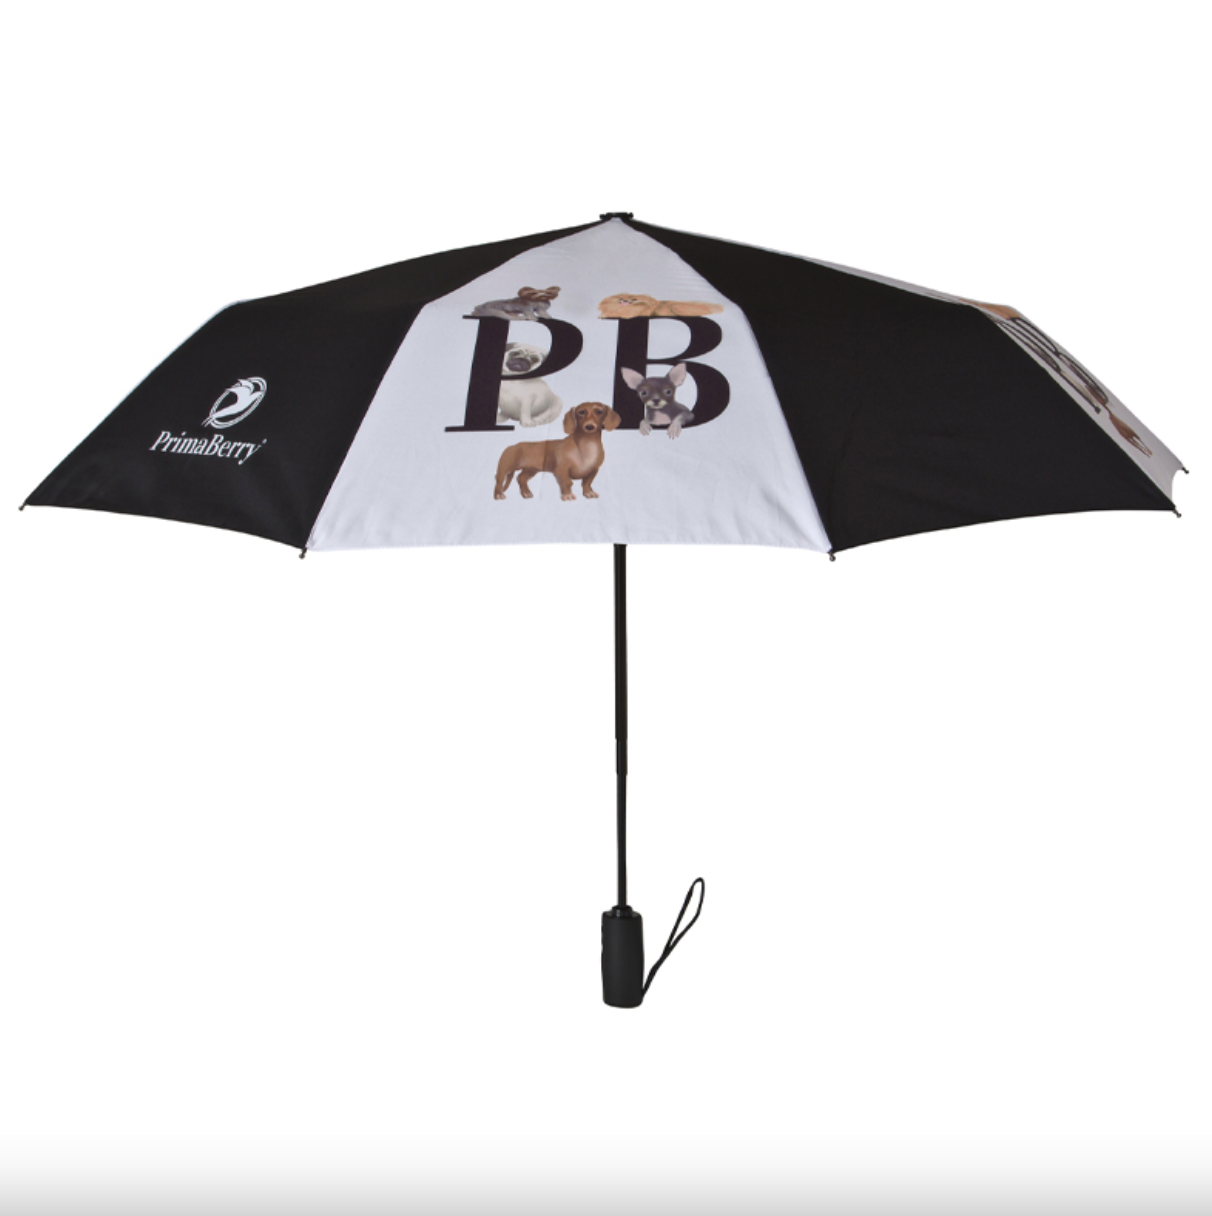 DogMania Foldable Umbrella: Stylish and Sustainable Umbrella for Dog Lovers